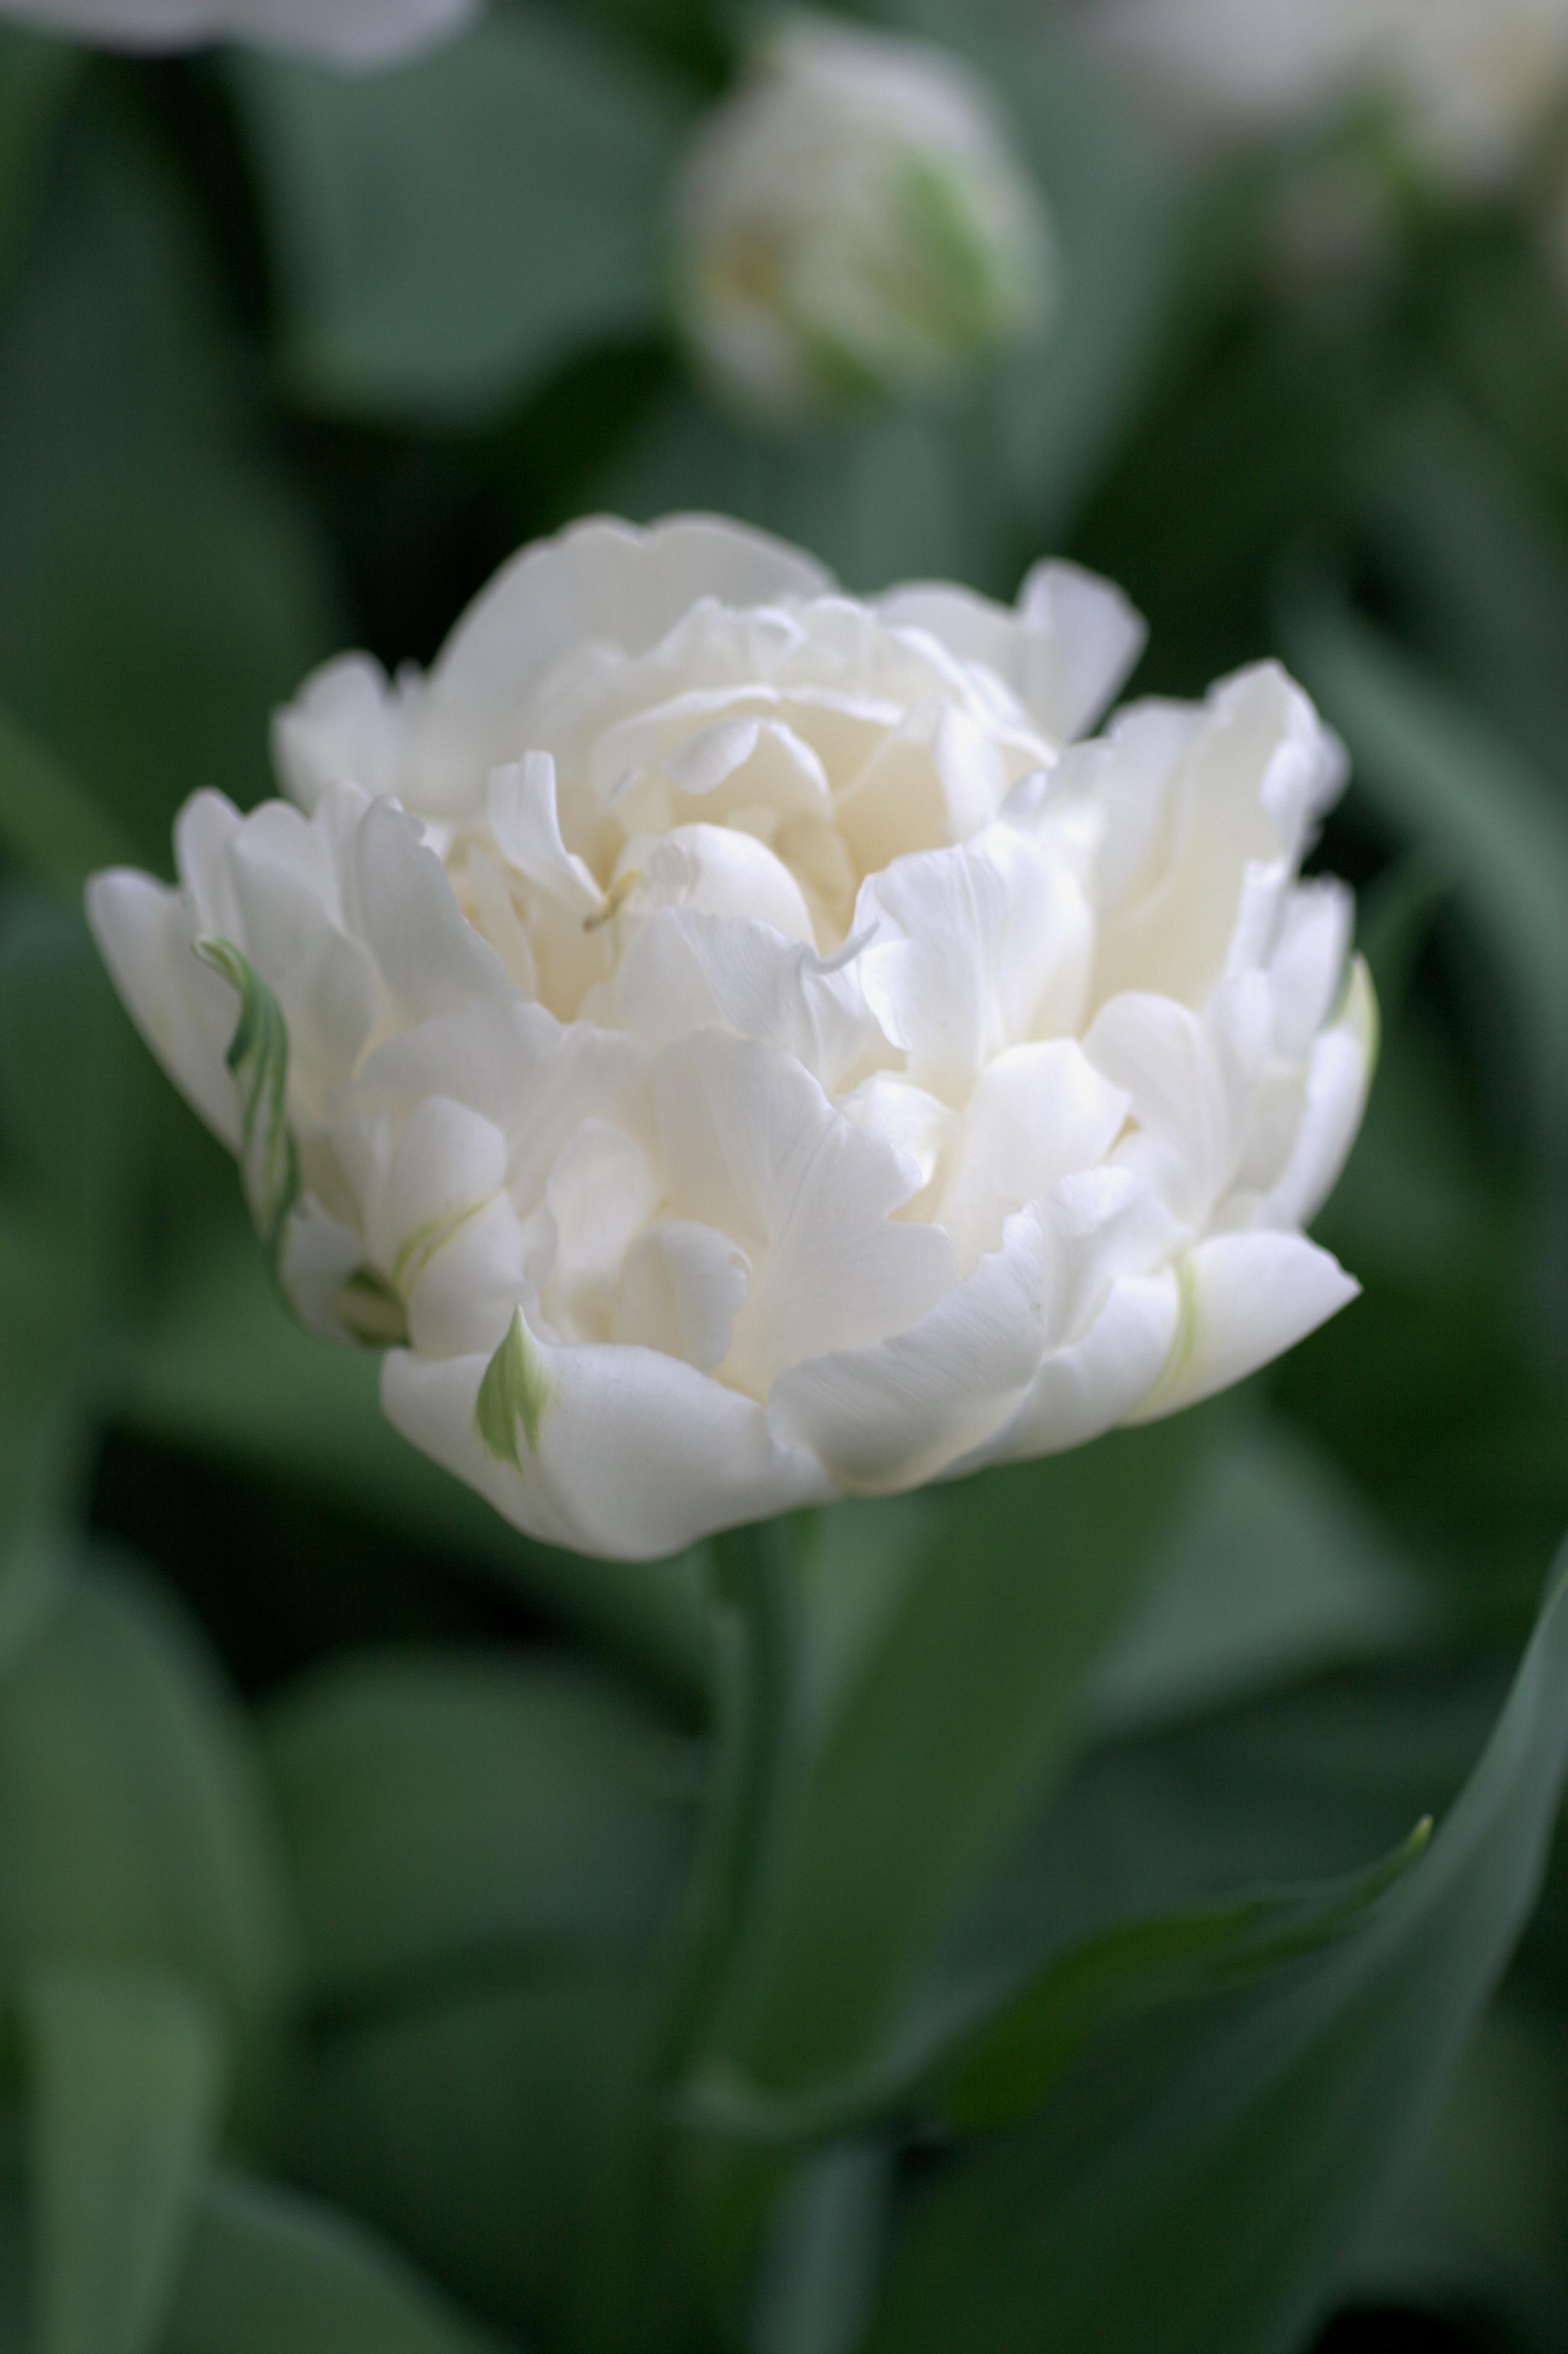 Tulip Double Early 'Mondial' - Tulip from Leo Berbee Bulb Company